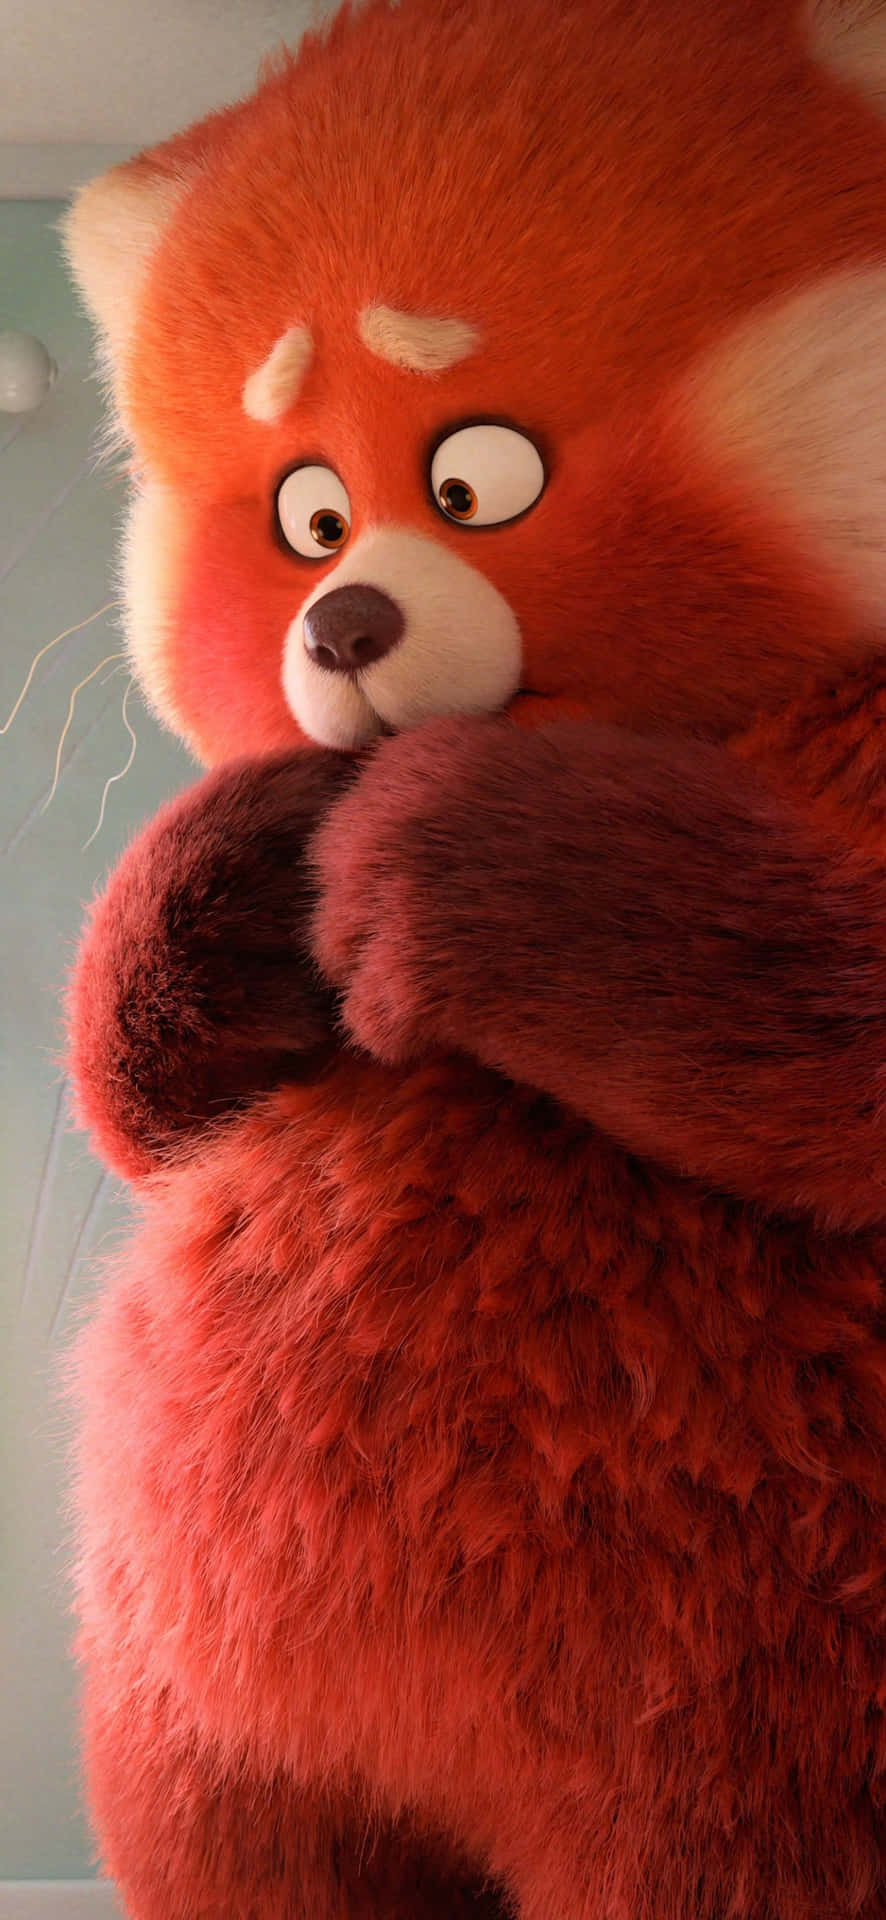 Red Panda Character Worried Look Wallpaper